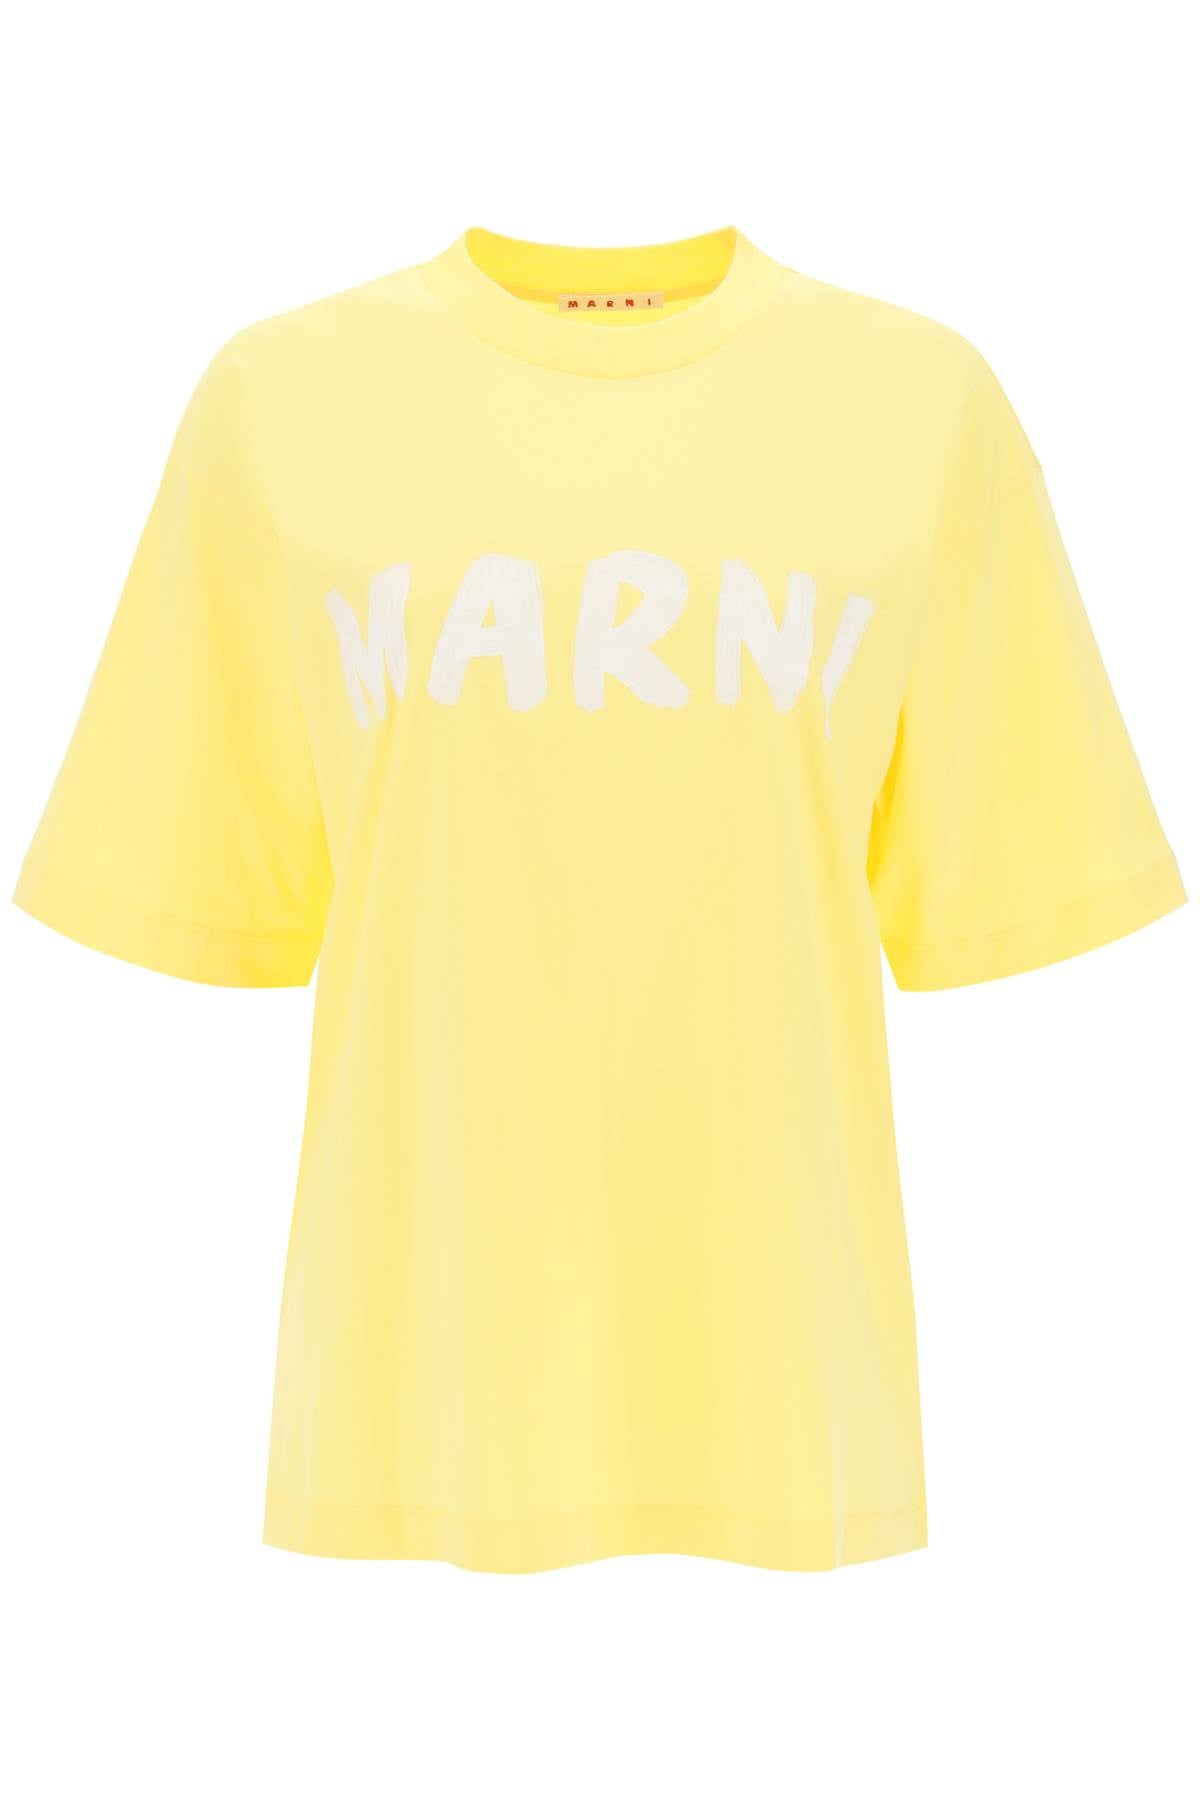 Marni t-shirt with maxi logo print-0